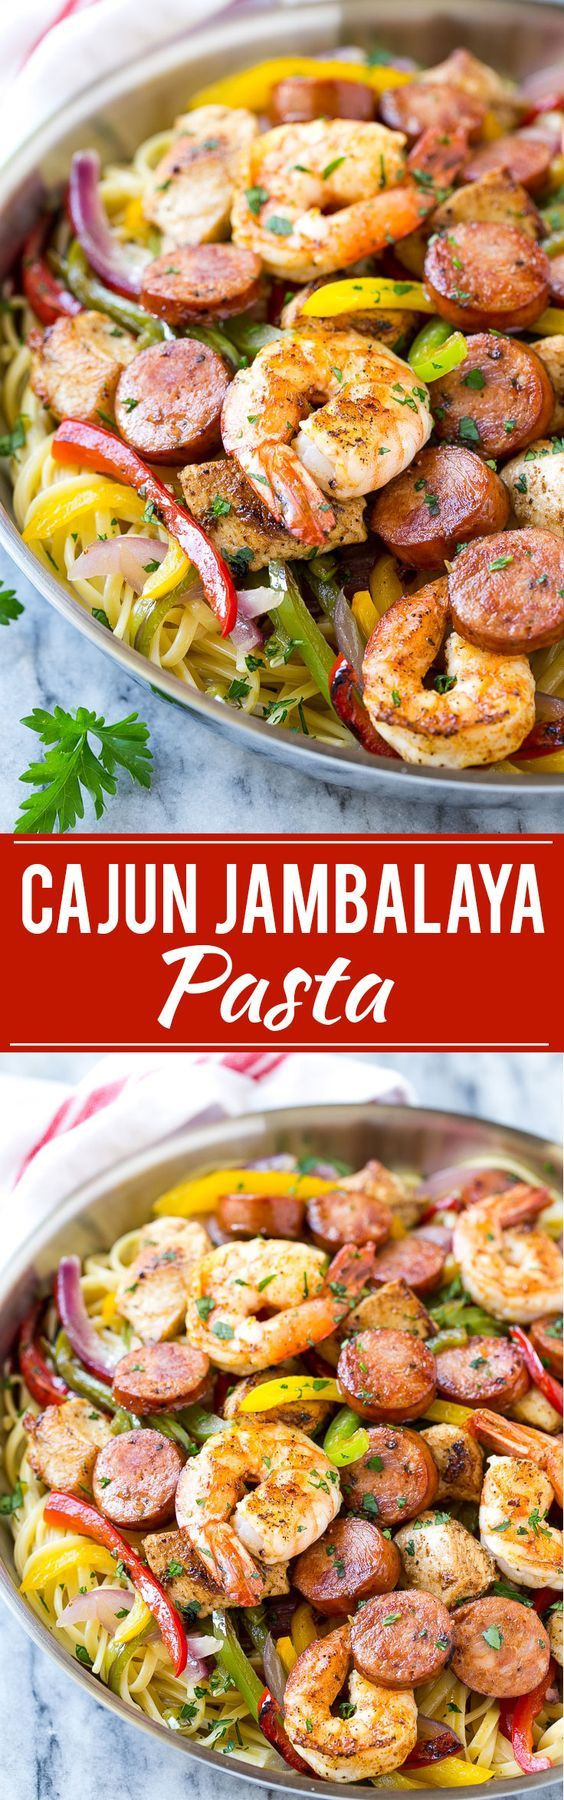 Cajun Shrimp And Andouille Pasta
 This recipe for Cajun jambalaya pasta is full of andouille